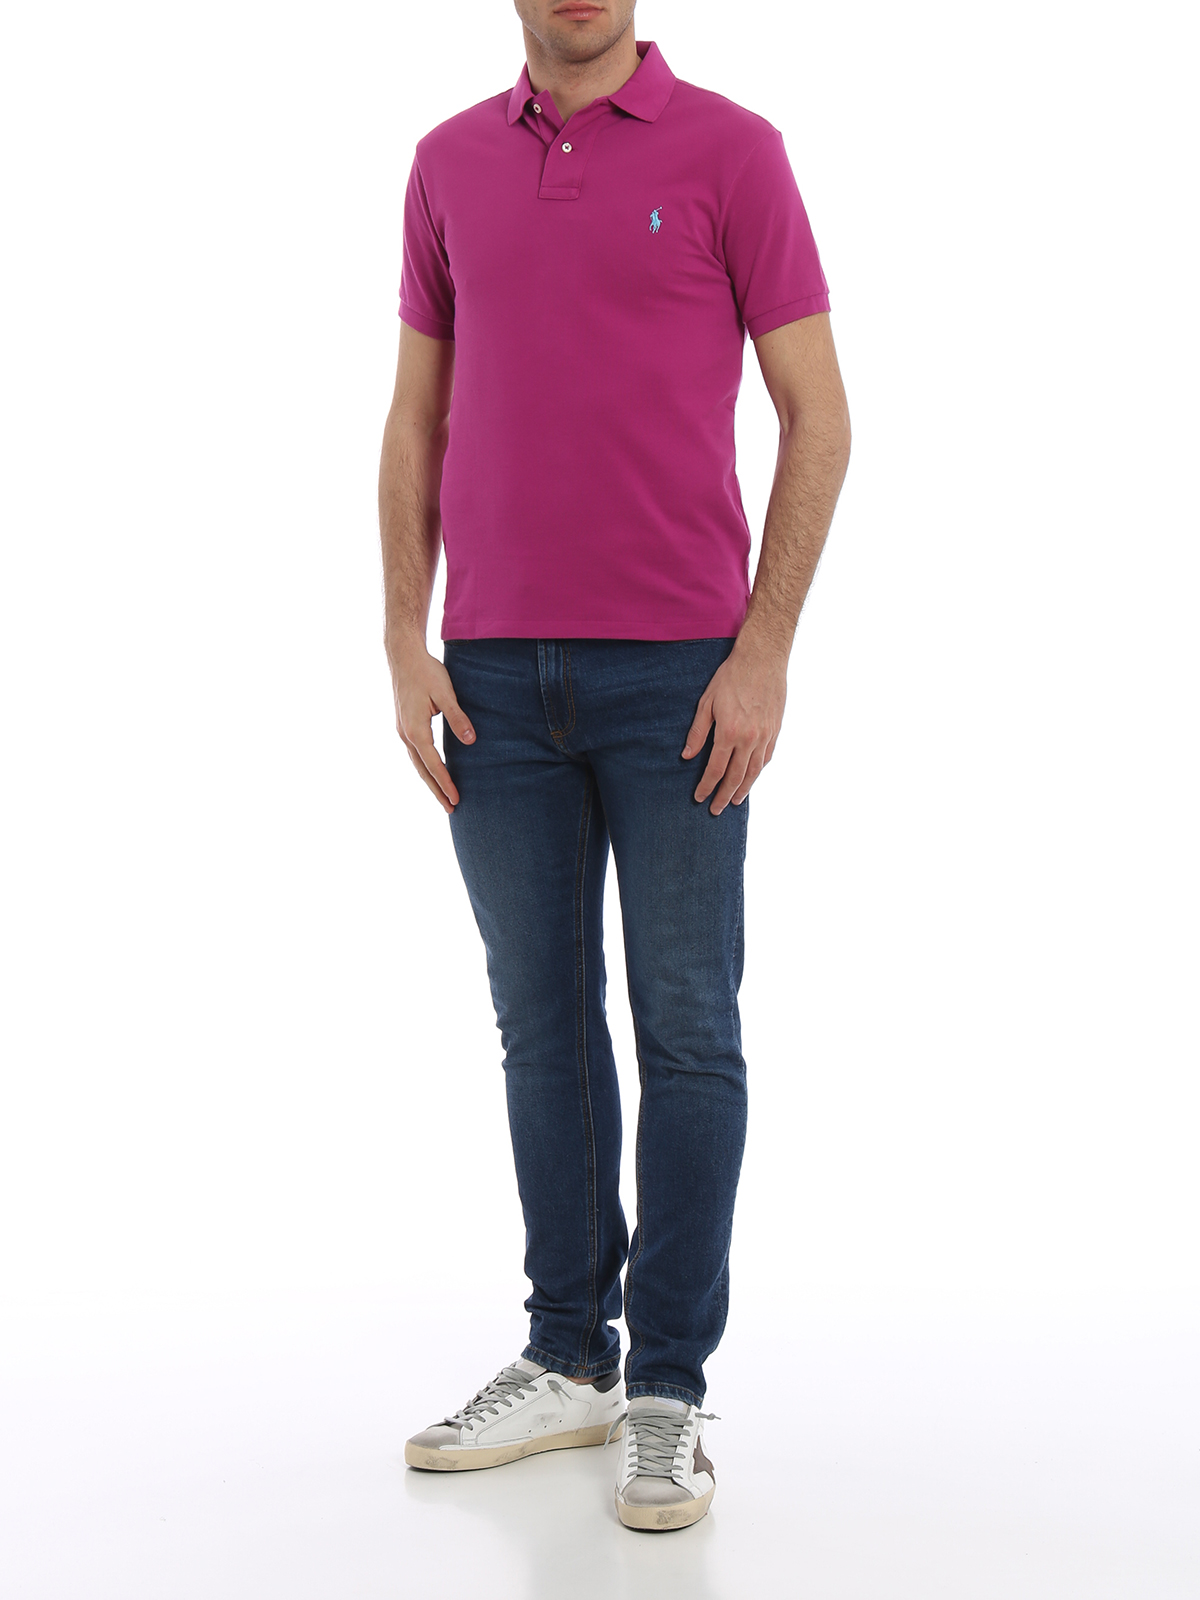 Polo shirts Polo Ralph Lauren - Classic purple polo shirt in pique cotton -  710536856172